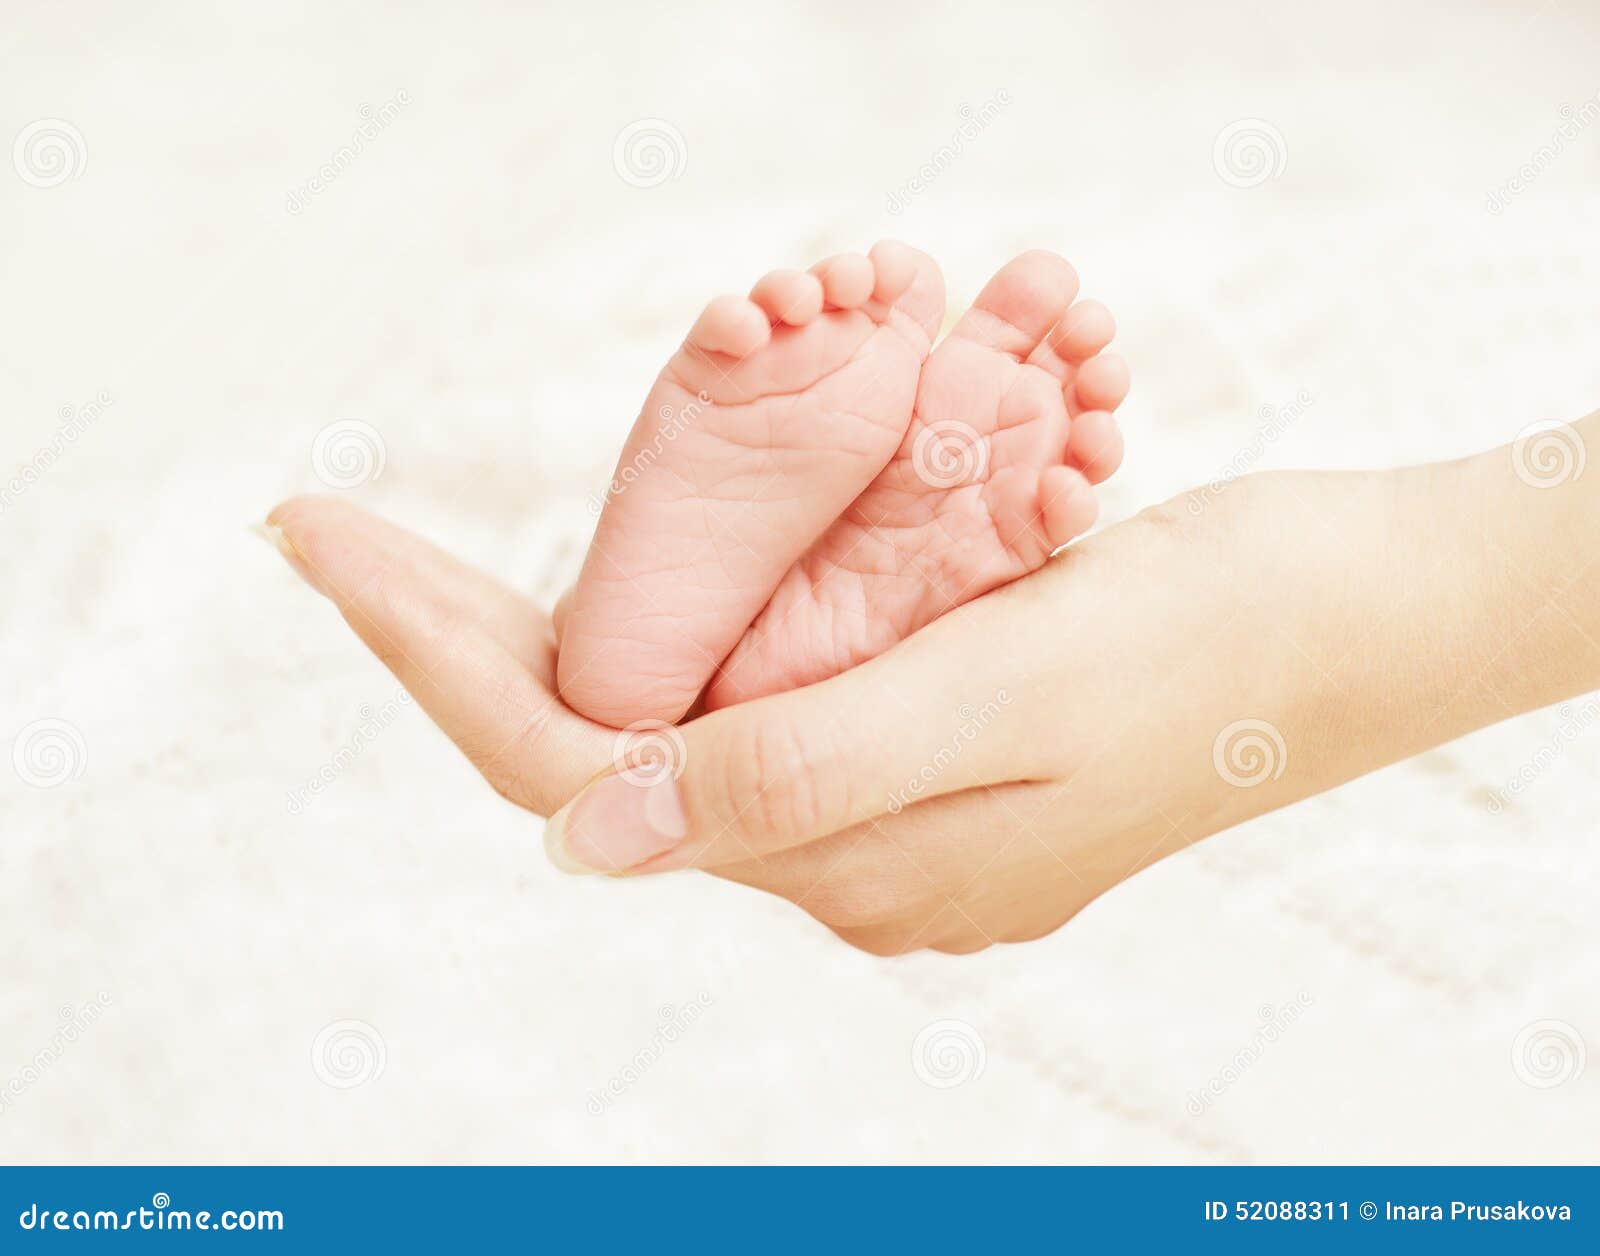 baby newborn feet mother hands. new born kid foot, family love